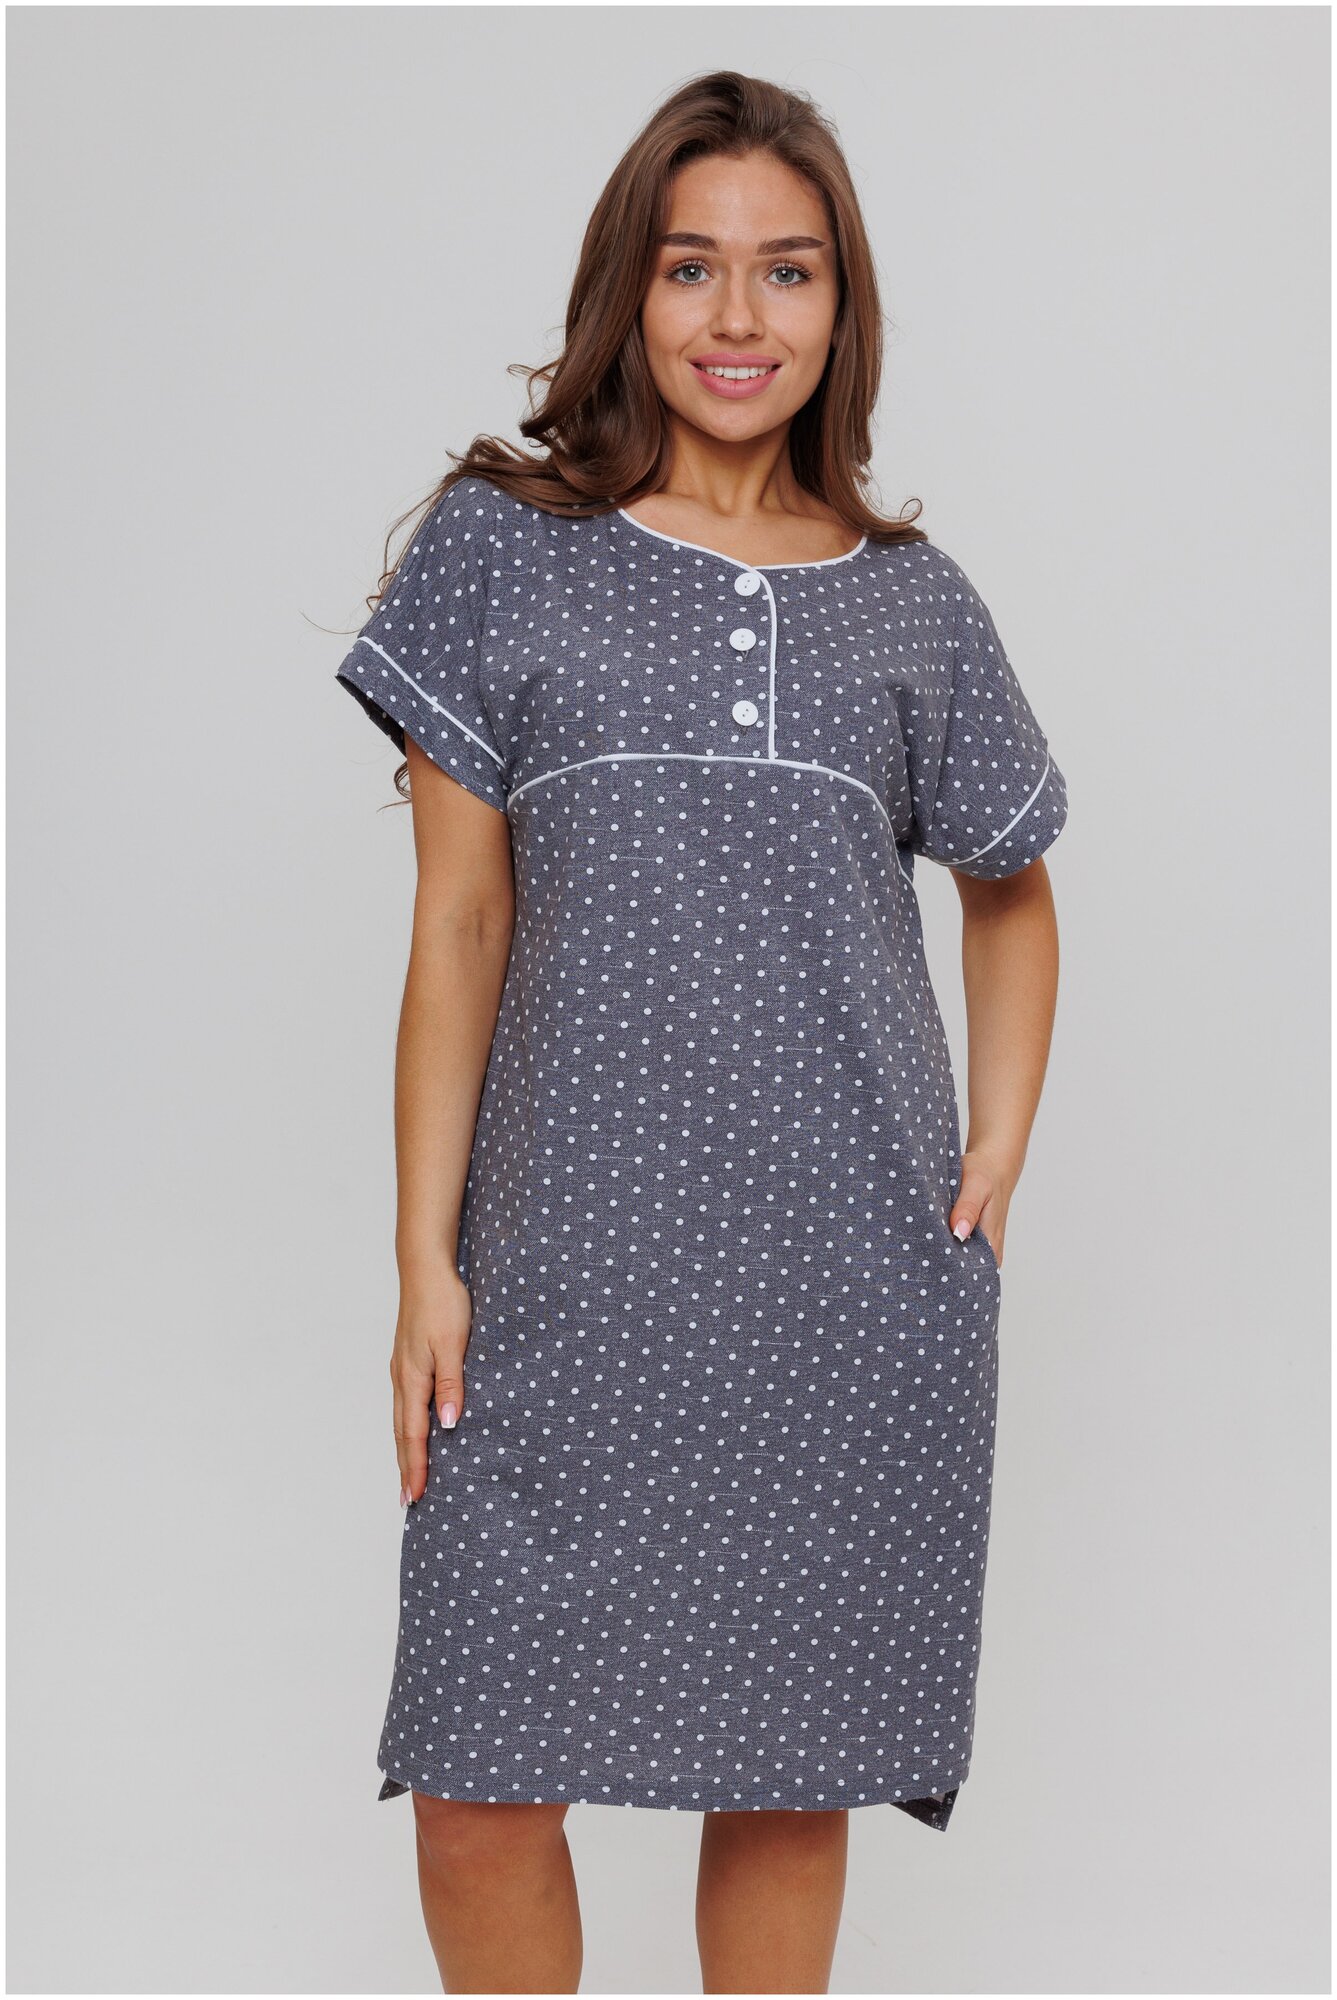 Платье-туника домашнее Modellini 1702/3 серый, 54 размер - фотография № 1